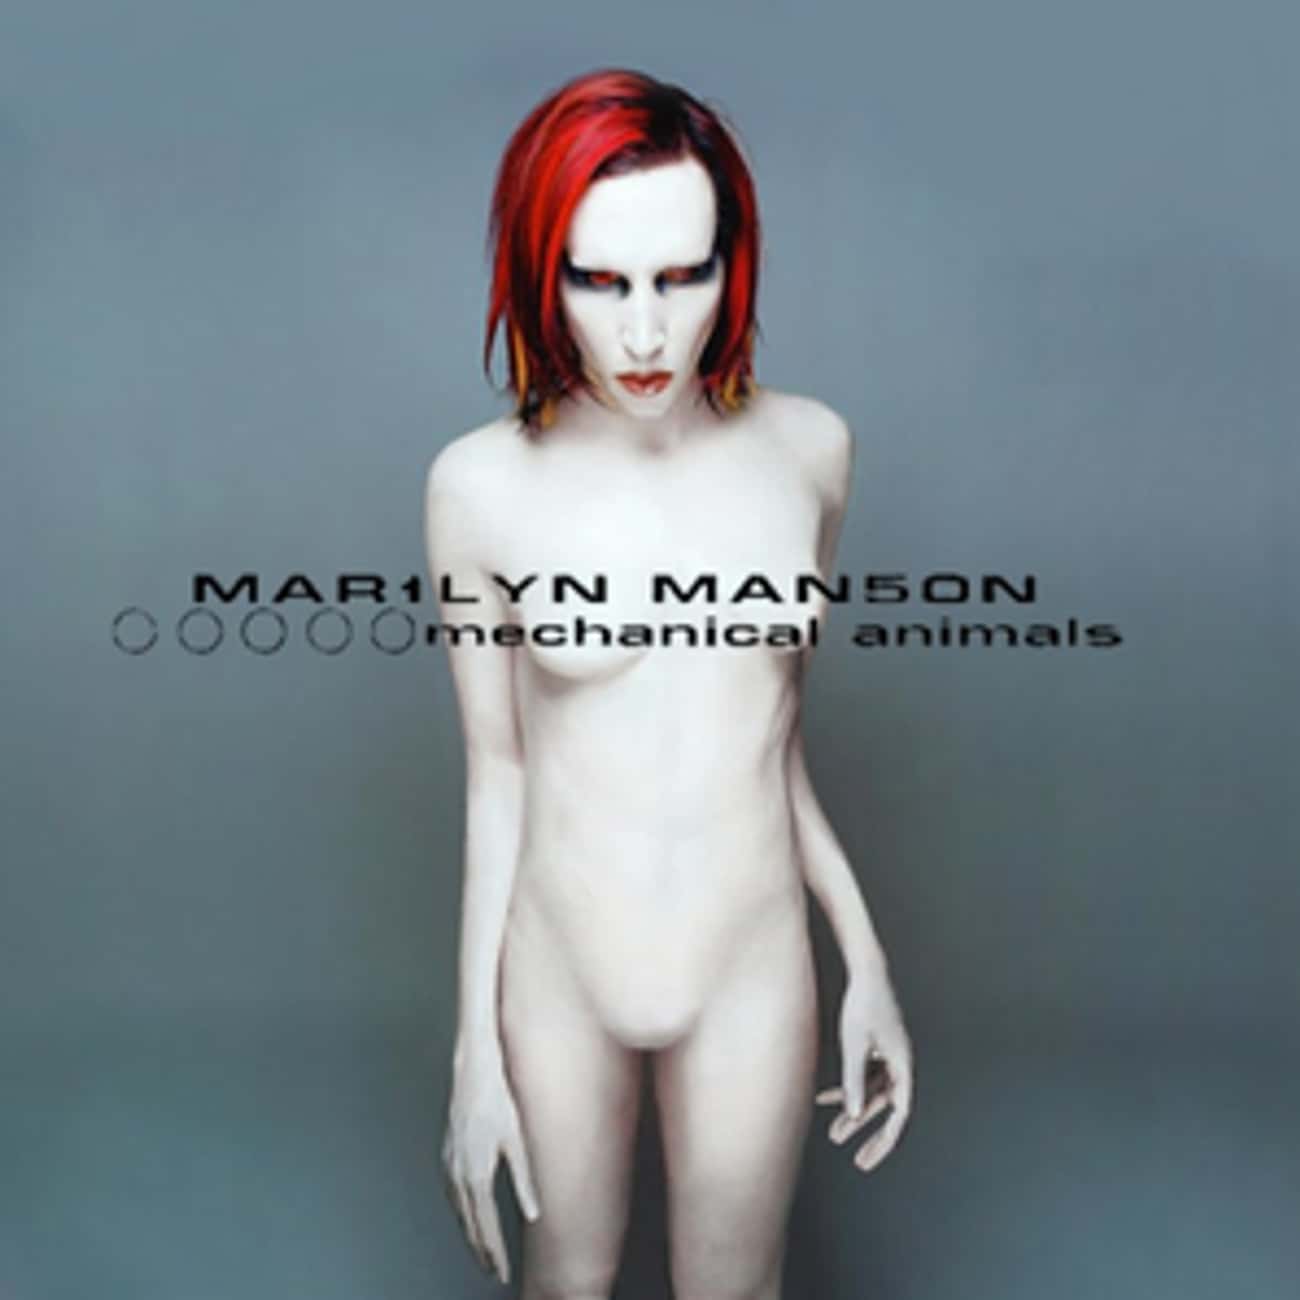 Manson Got Breast Implants